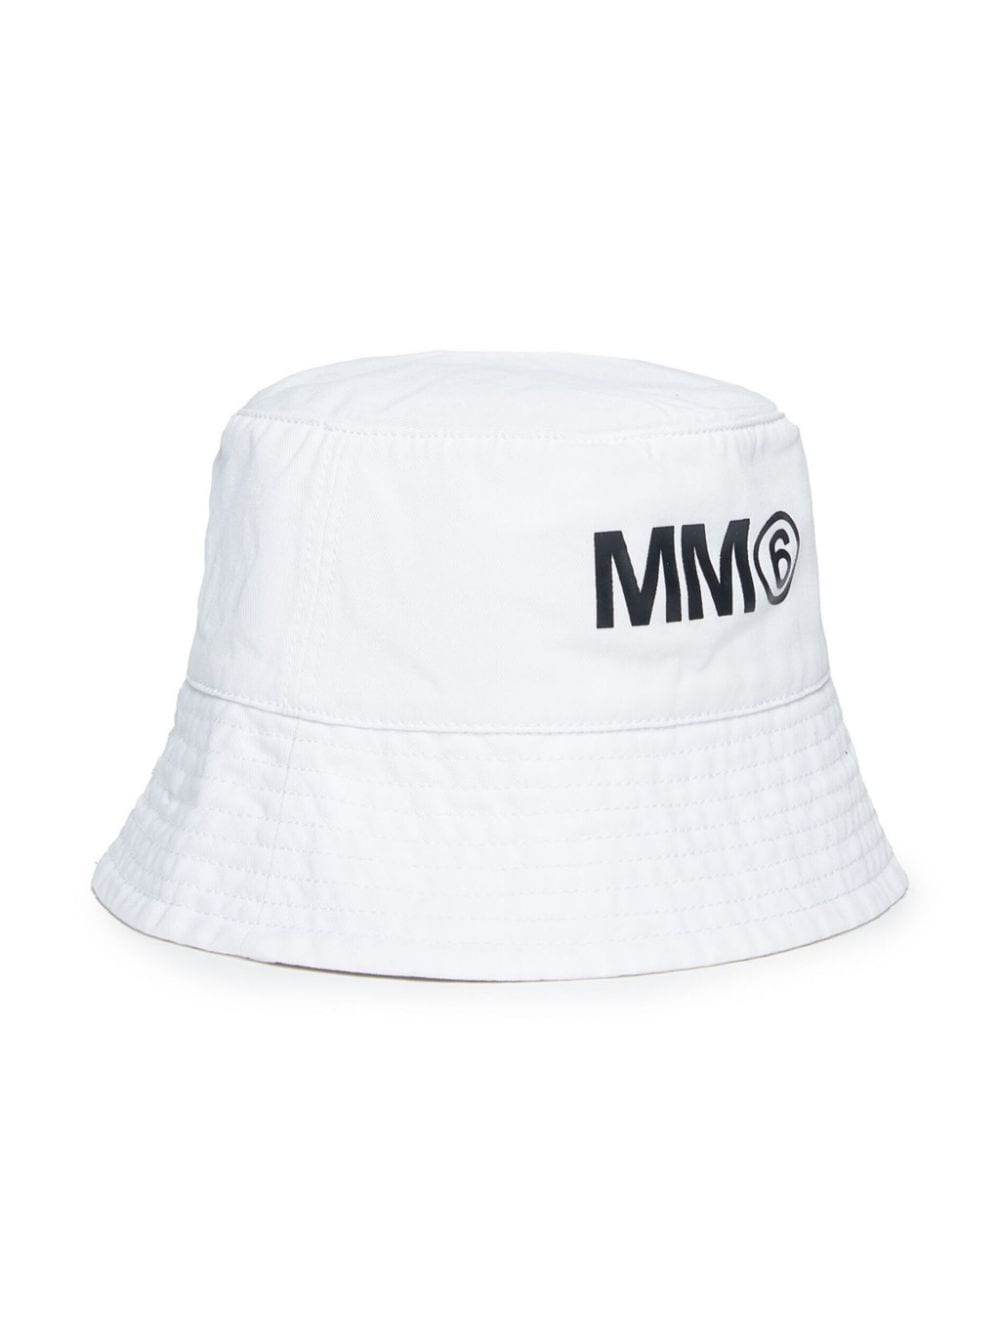 Cappello bianco per bambina con logo